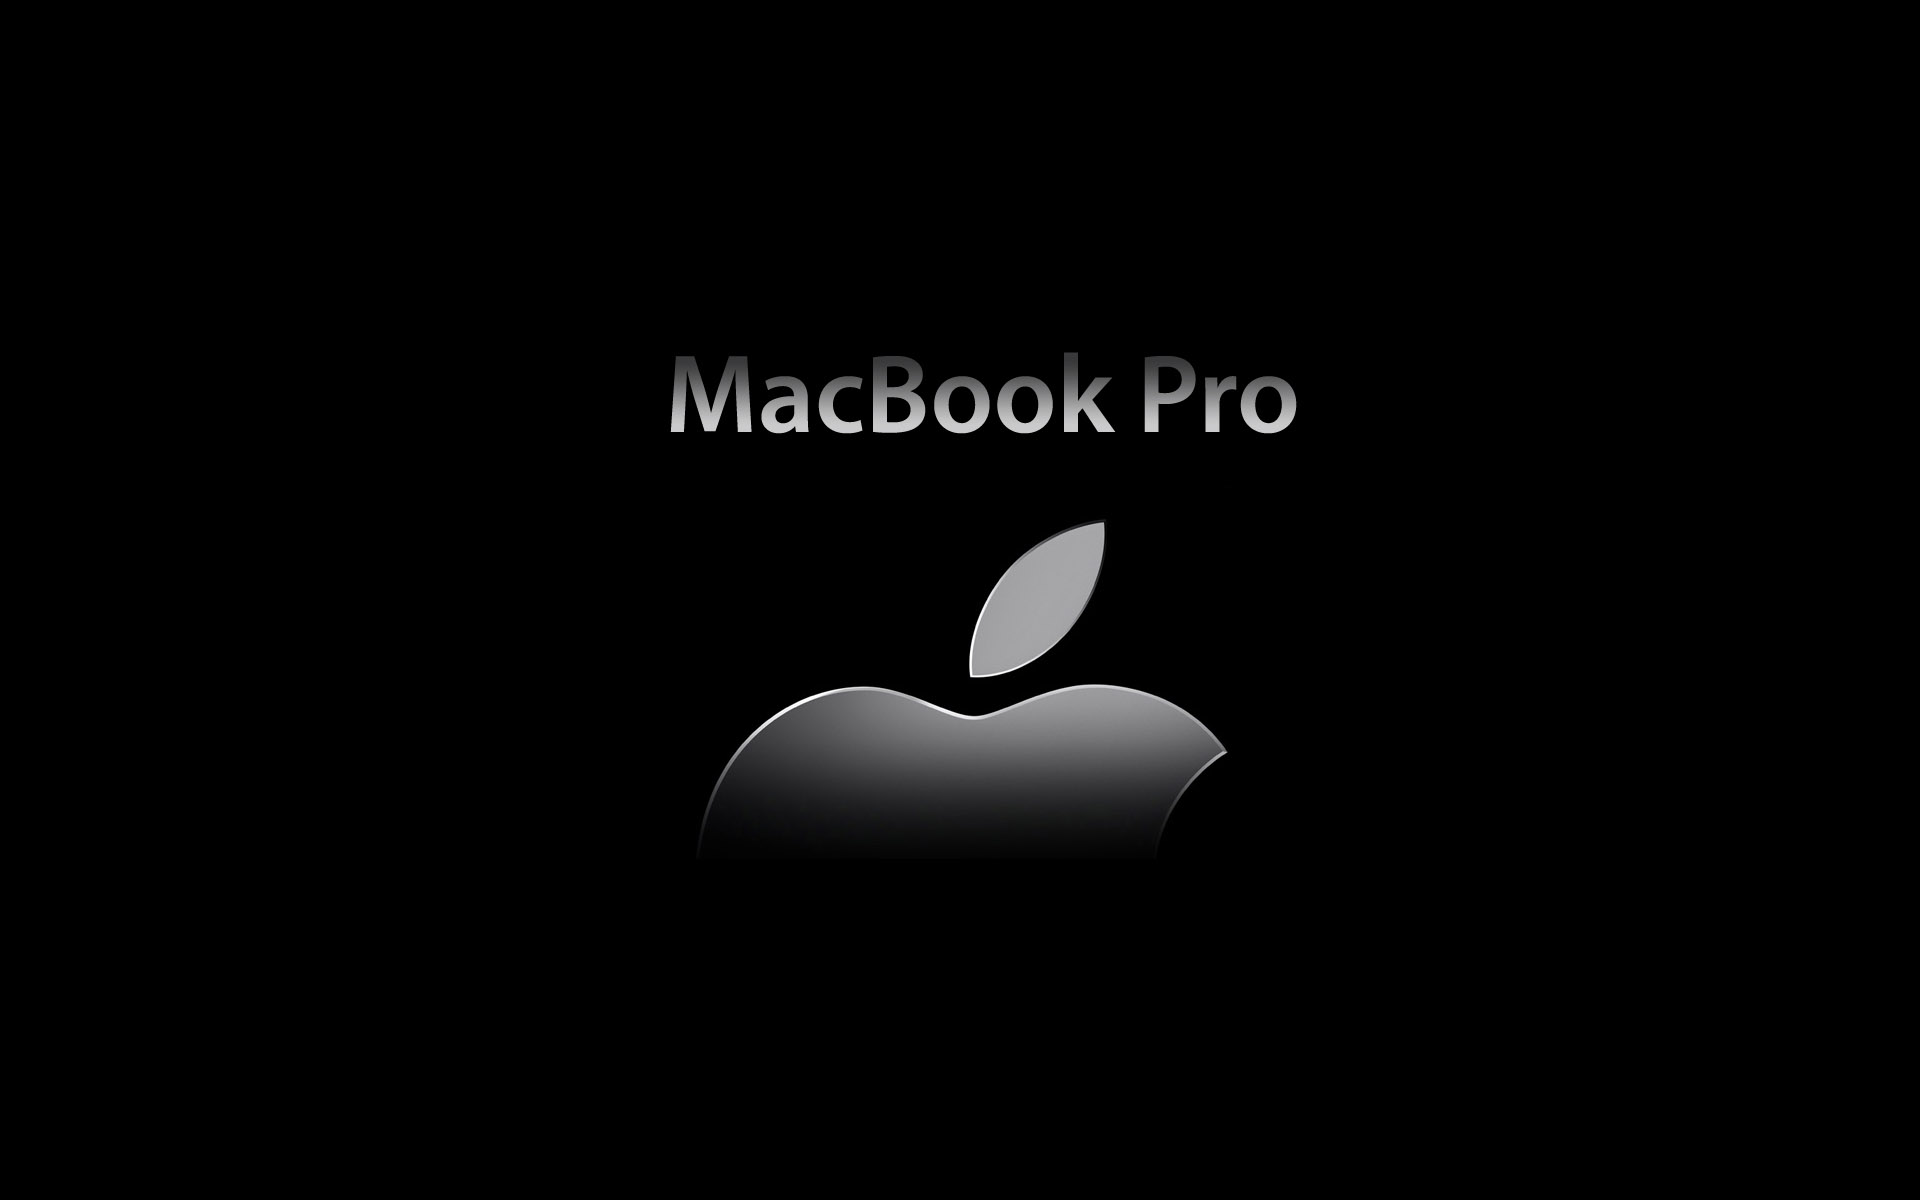 macbook pro desktop wallpaper | Macbook Pro Wallpaper HD large resolution wallpaper background. | MacBook Pro Wallpaper | Pinterest